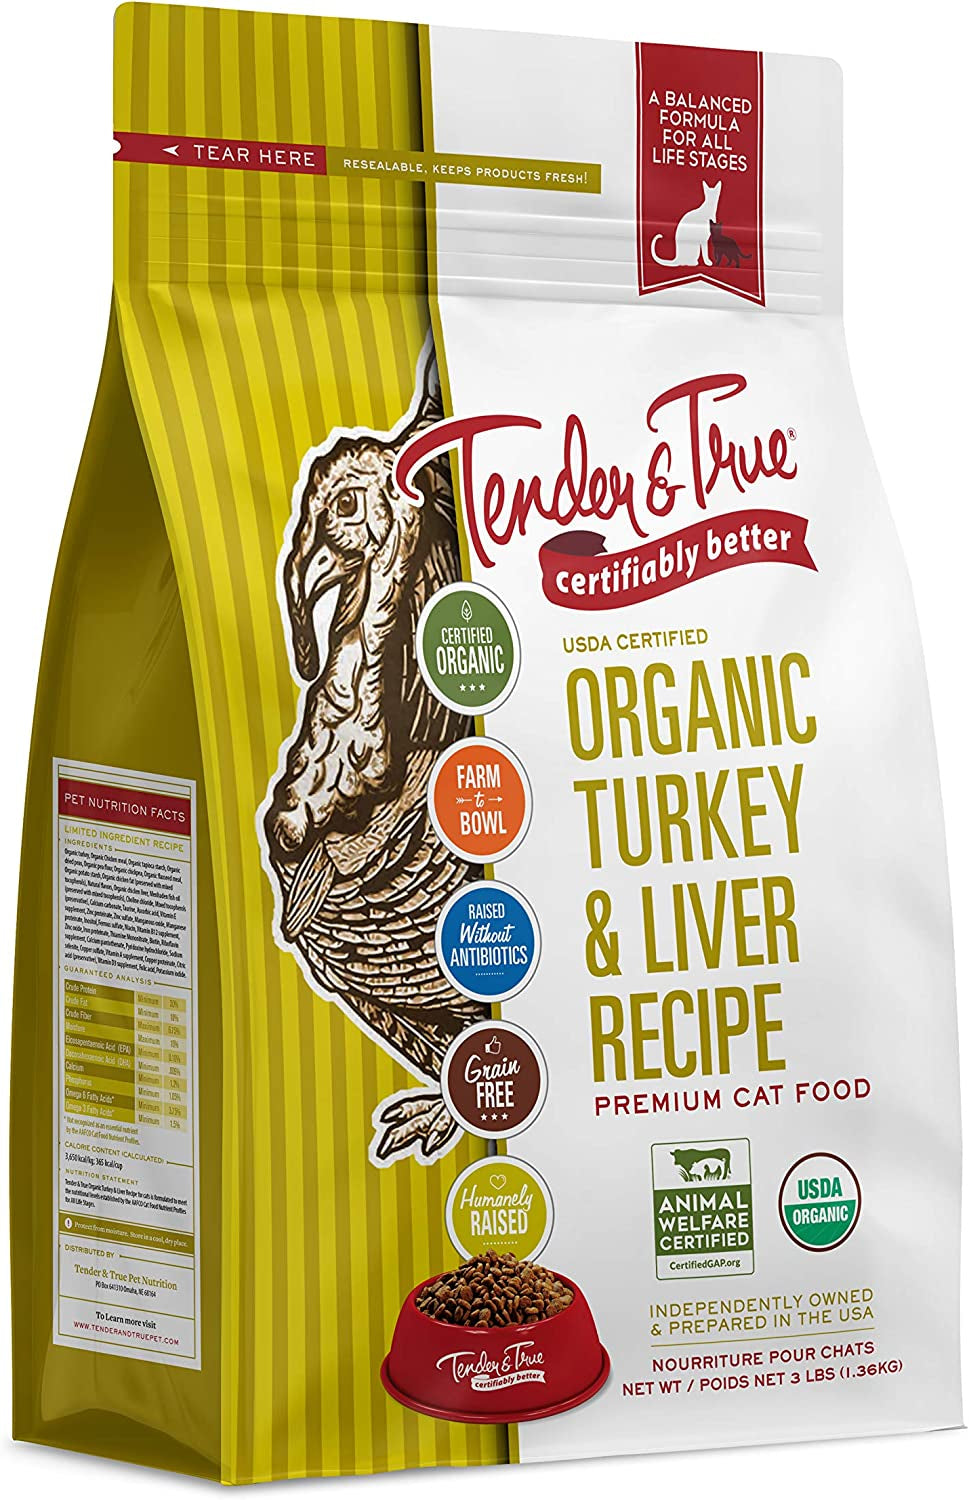 Tender & True Organic Turkey & Liver Recipe Cat Food, 3 Lb